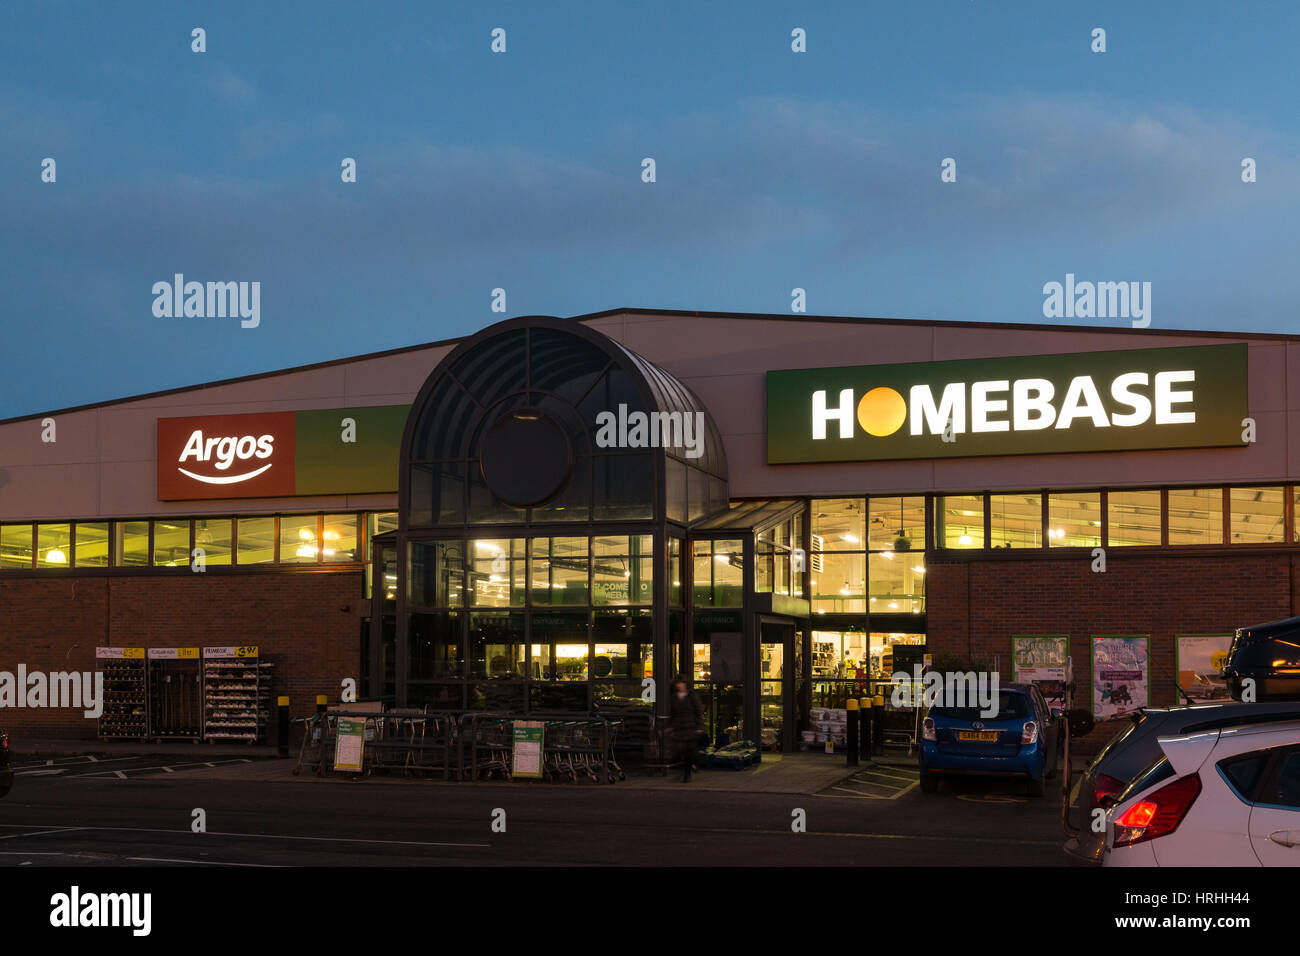 Homebase DIY superstore with Argos concession, Milngavie, Glasgow, Scotland, UK - late evening Stock Photo